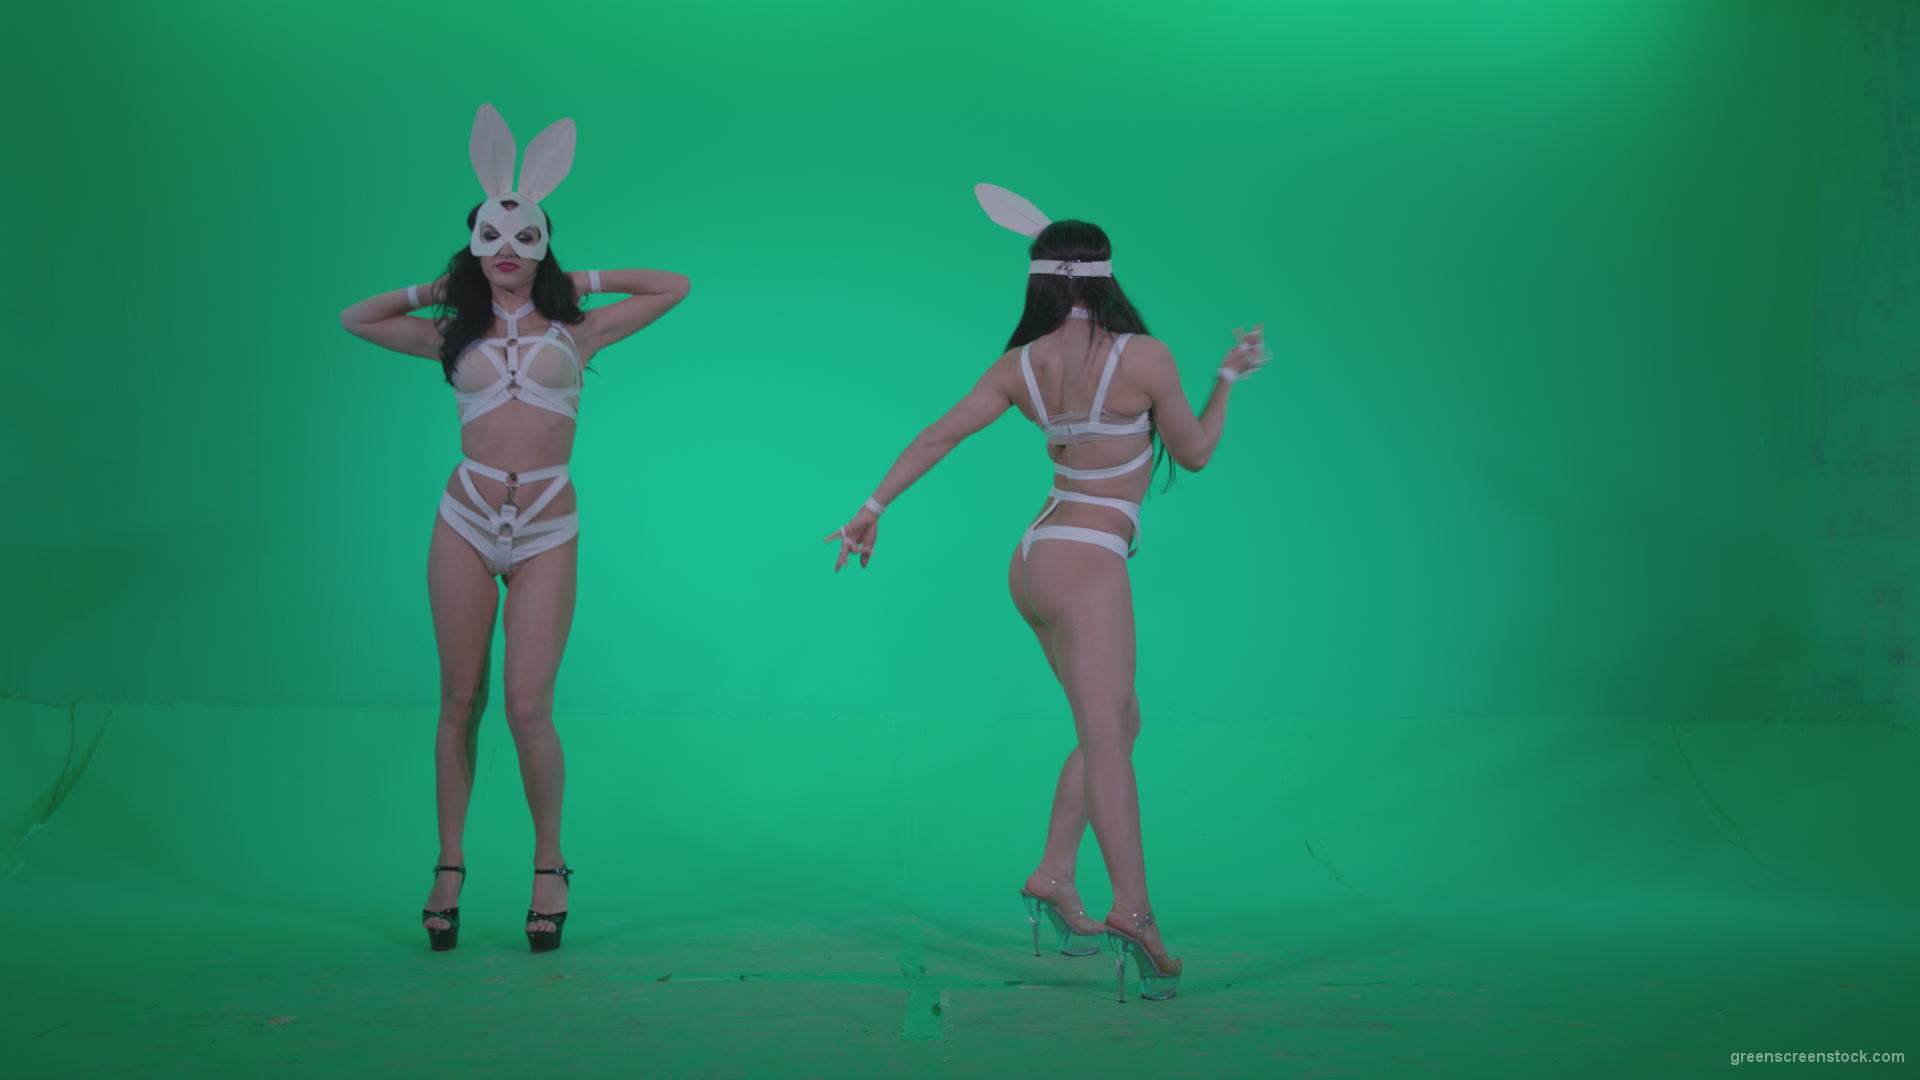 Go-go-Dancer-White-Rabbit-m1-Green-Screen-Video-Footage_006 Green Screen Stock